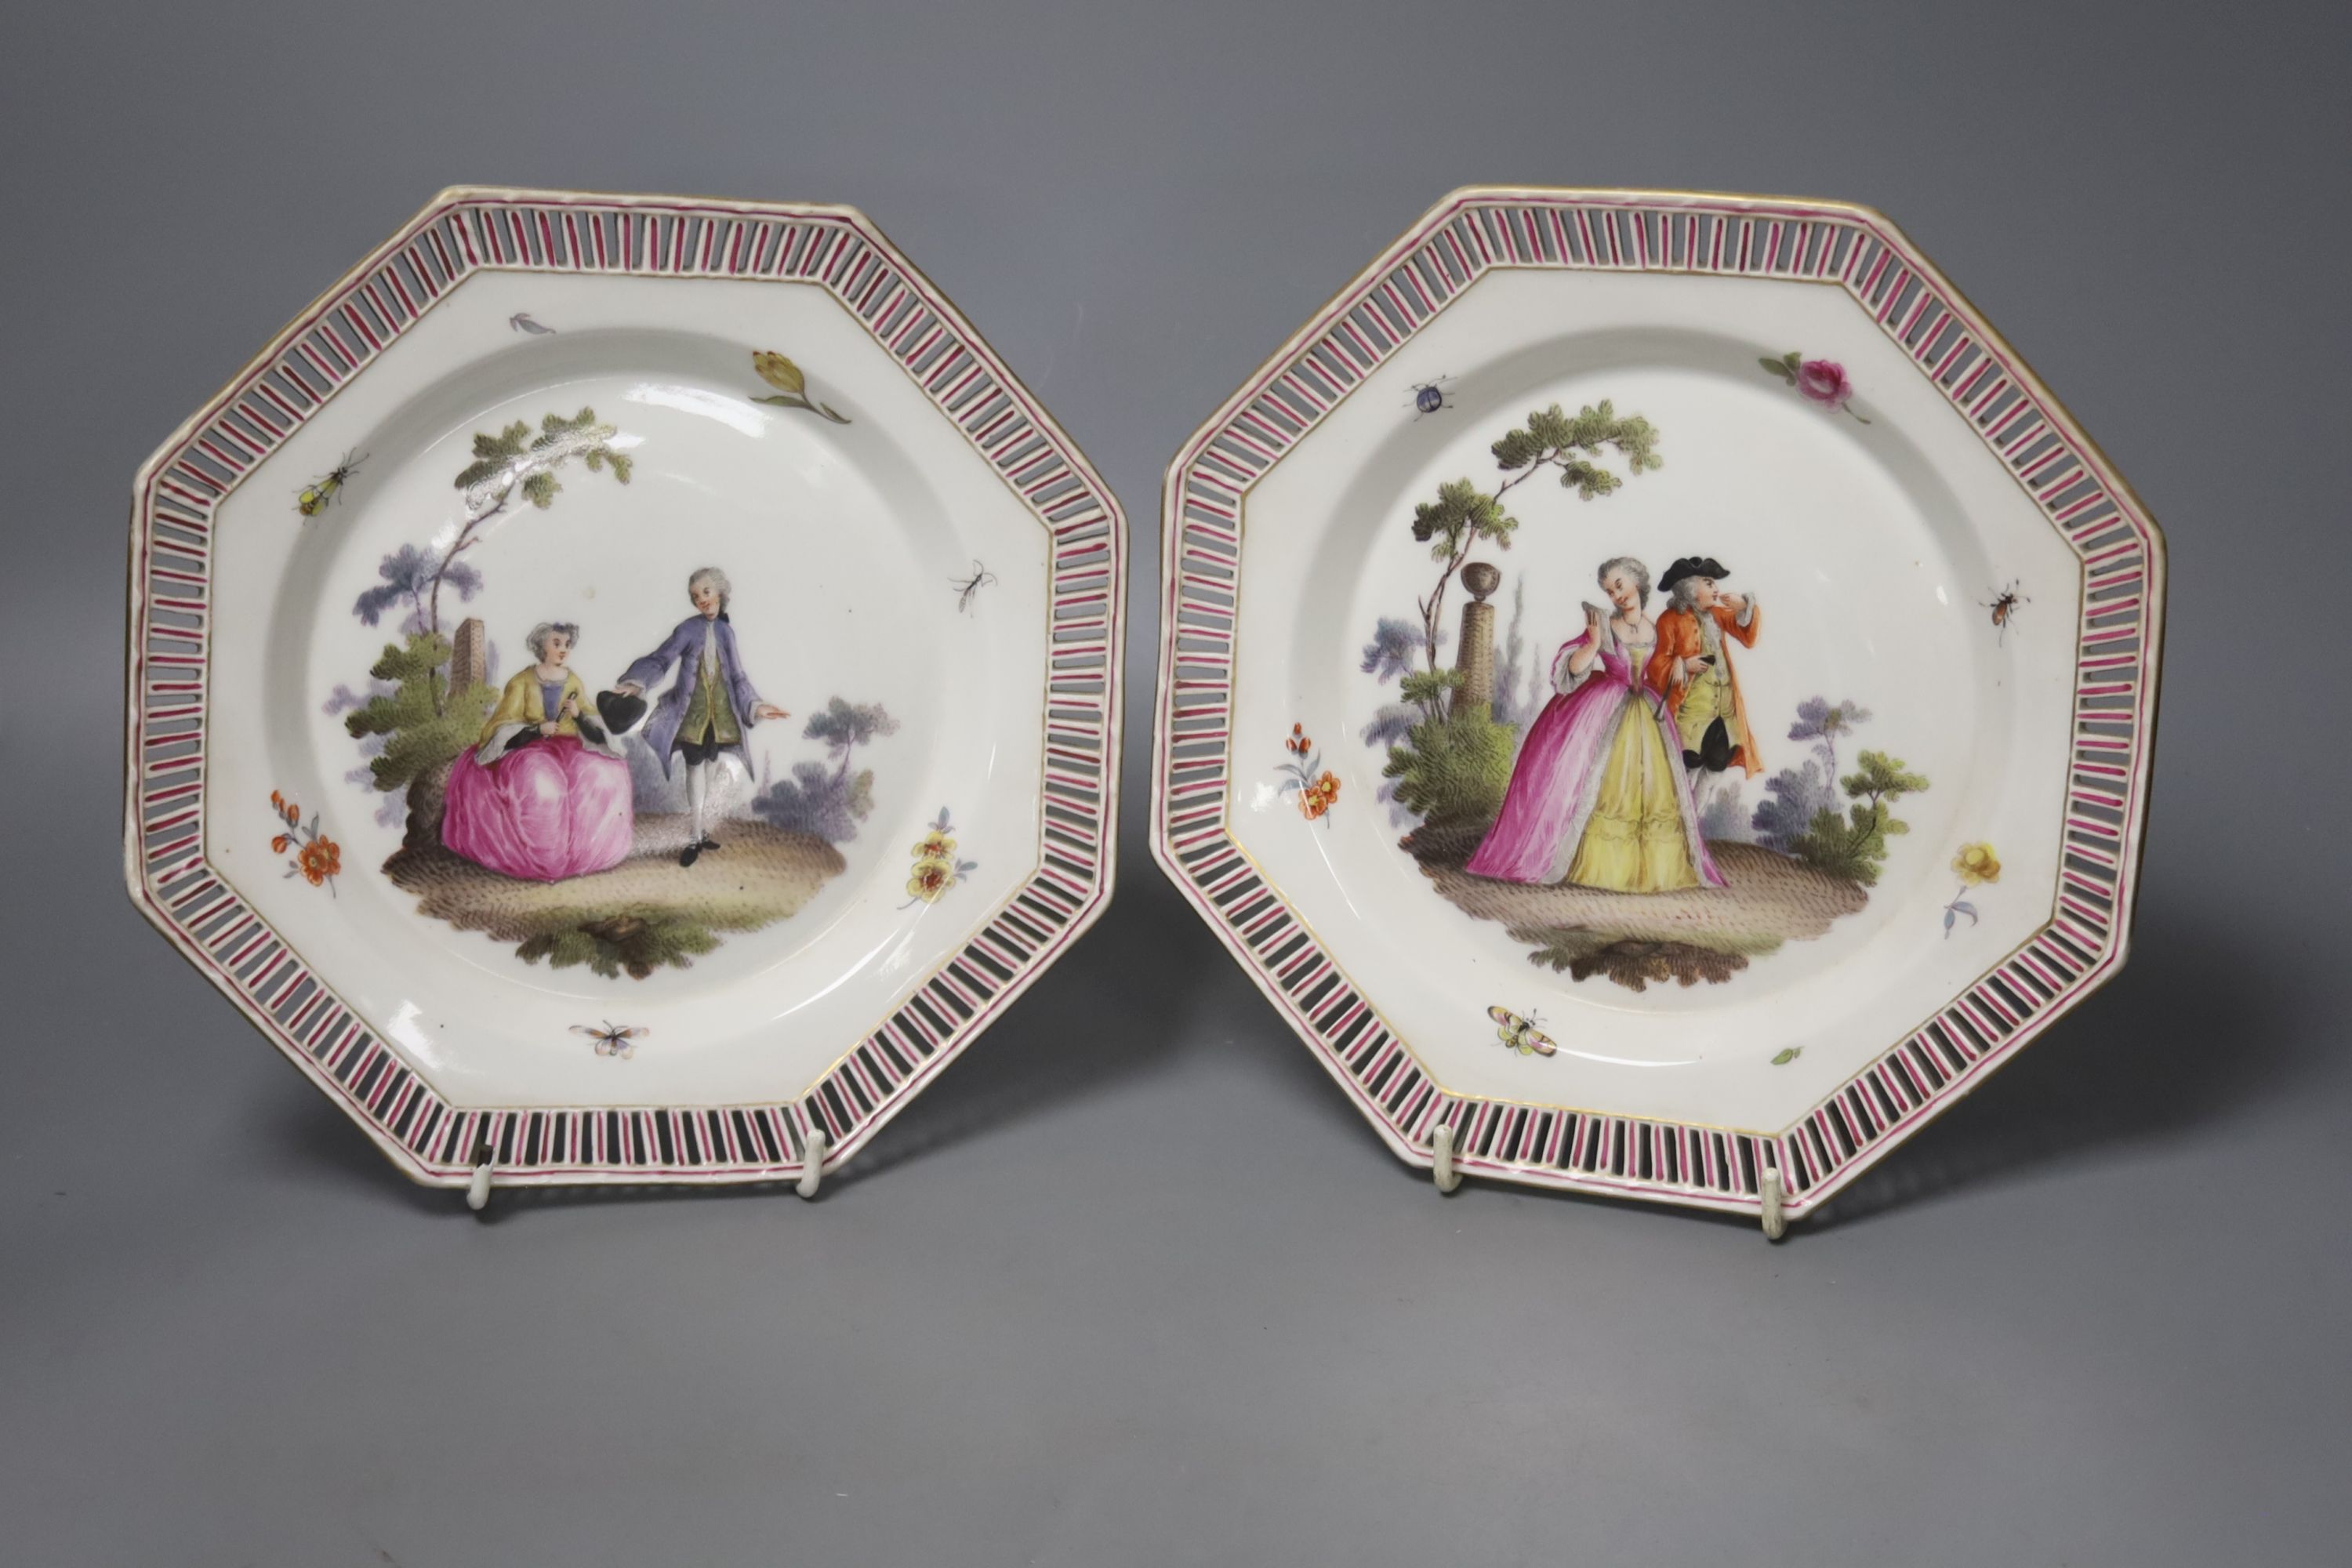 A pair of 19th century Berlin plates, diameter 21cm